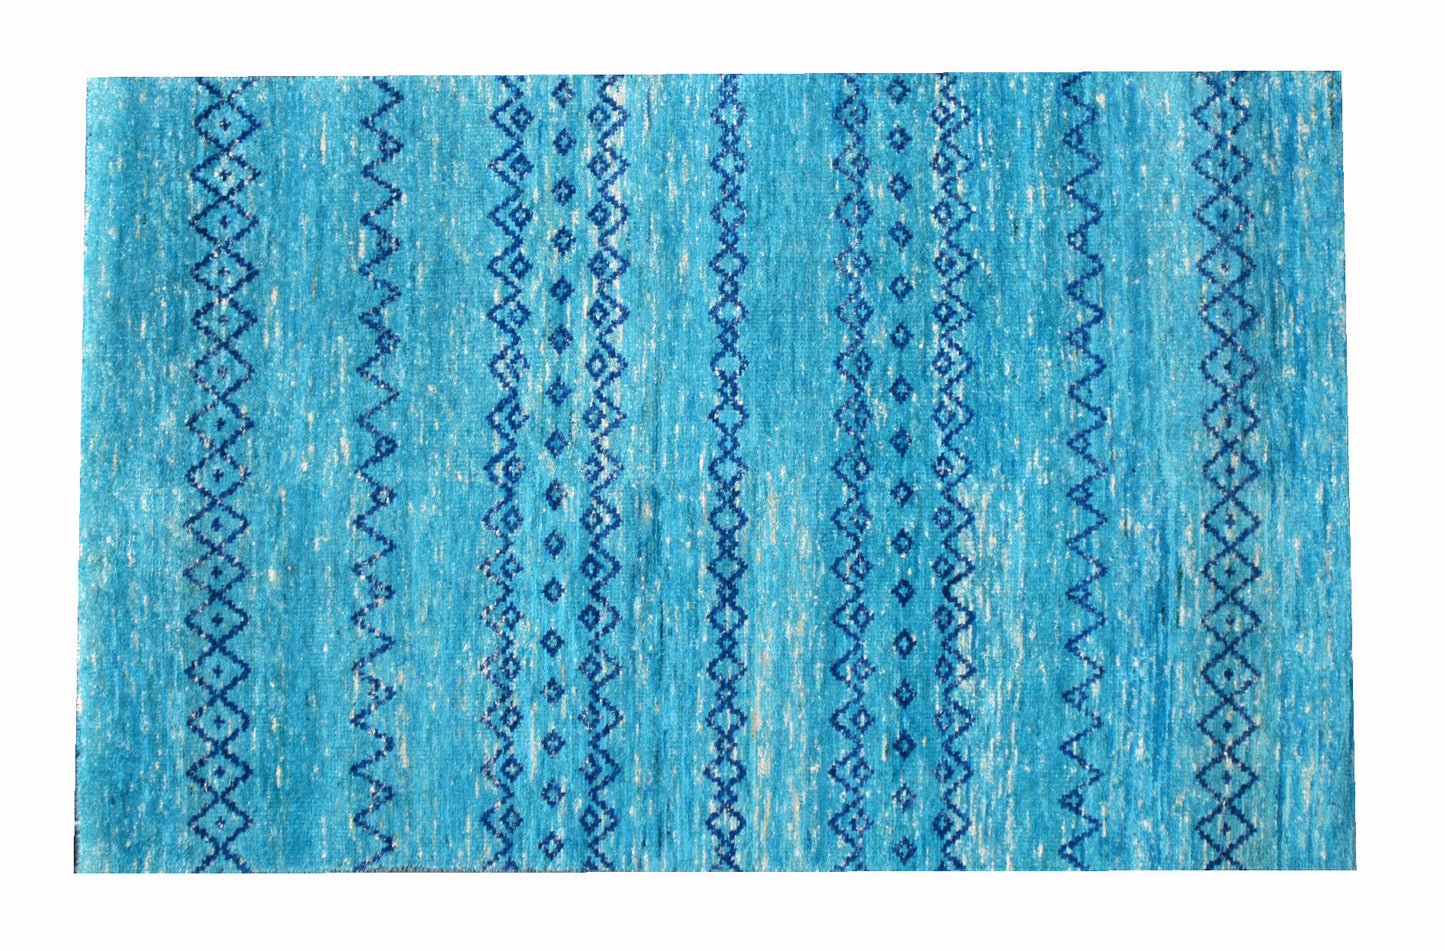 5X8 Silk Modern Moroccan Hand-Knotted Aqua Rug